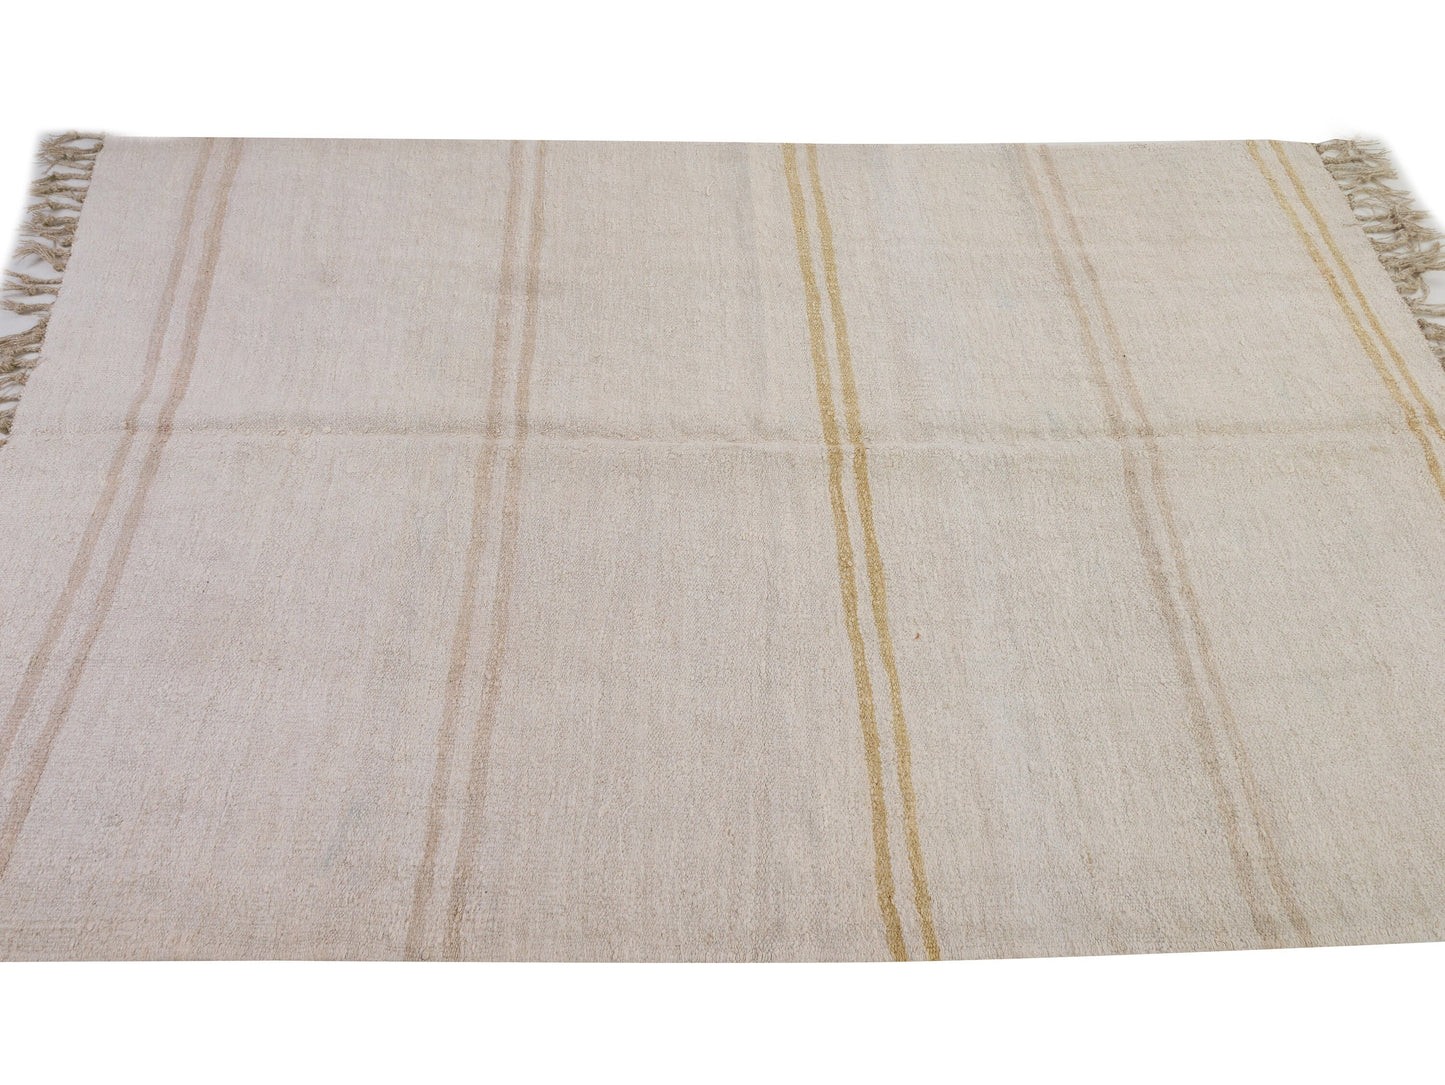 White Area Hemp Kilim rug, Vintage Turkish Kilim Rug 5x8, Handmade rug, Living room rug, Contemporary decor, Modern rug, 9686